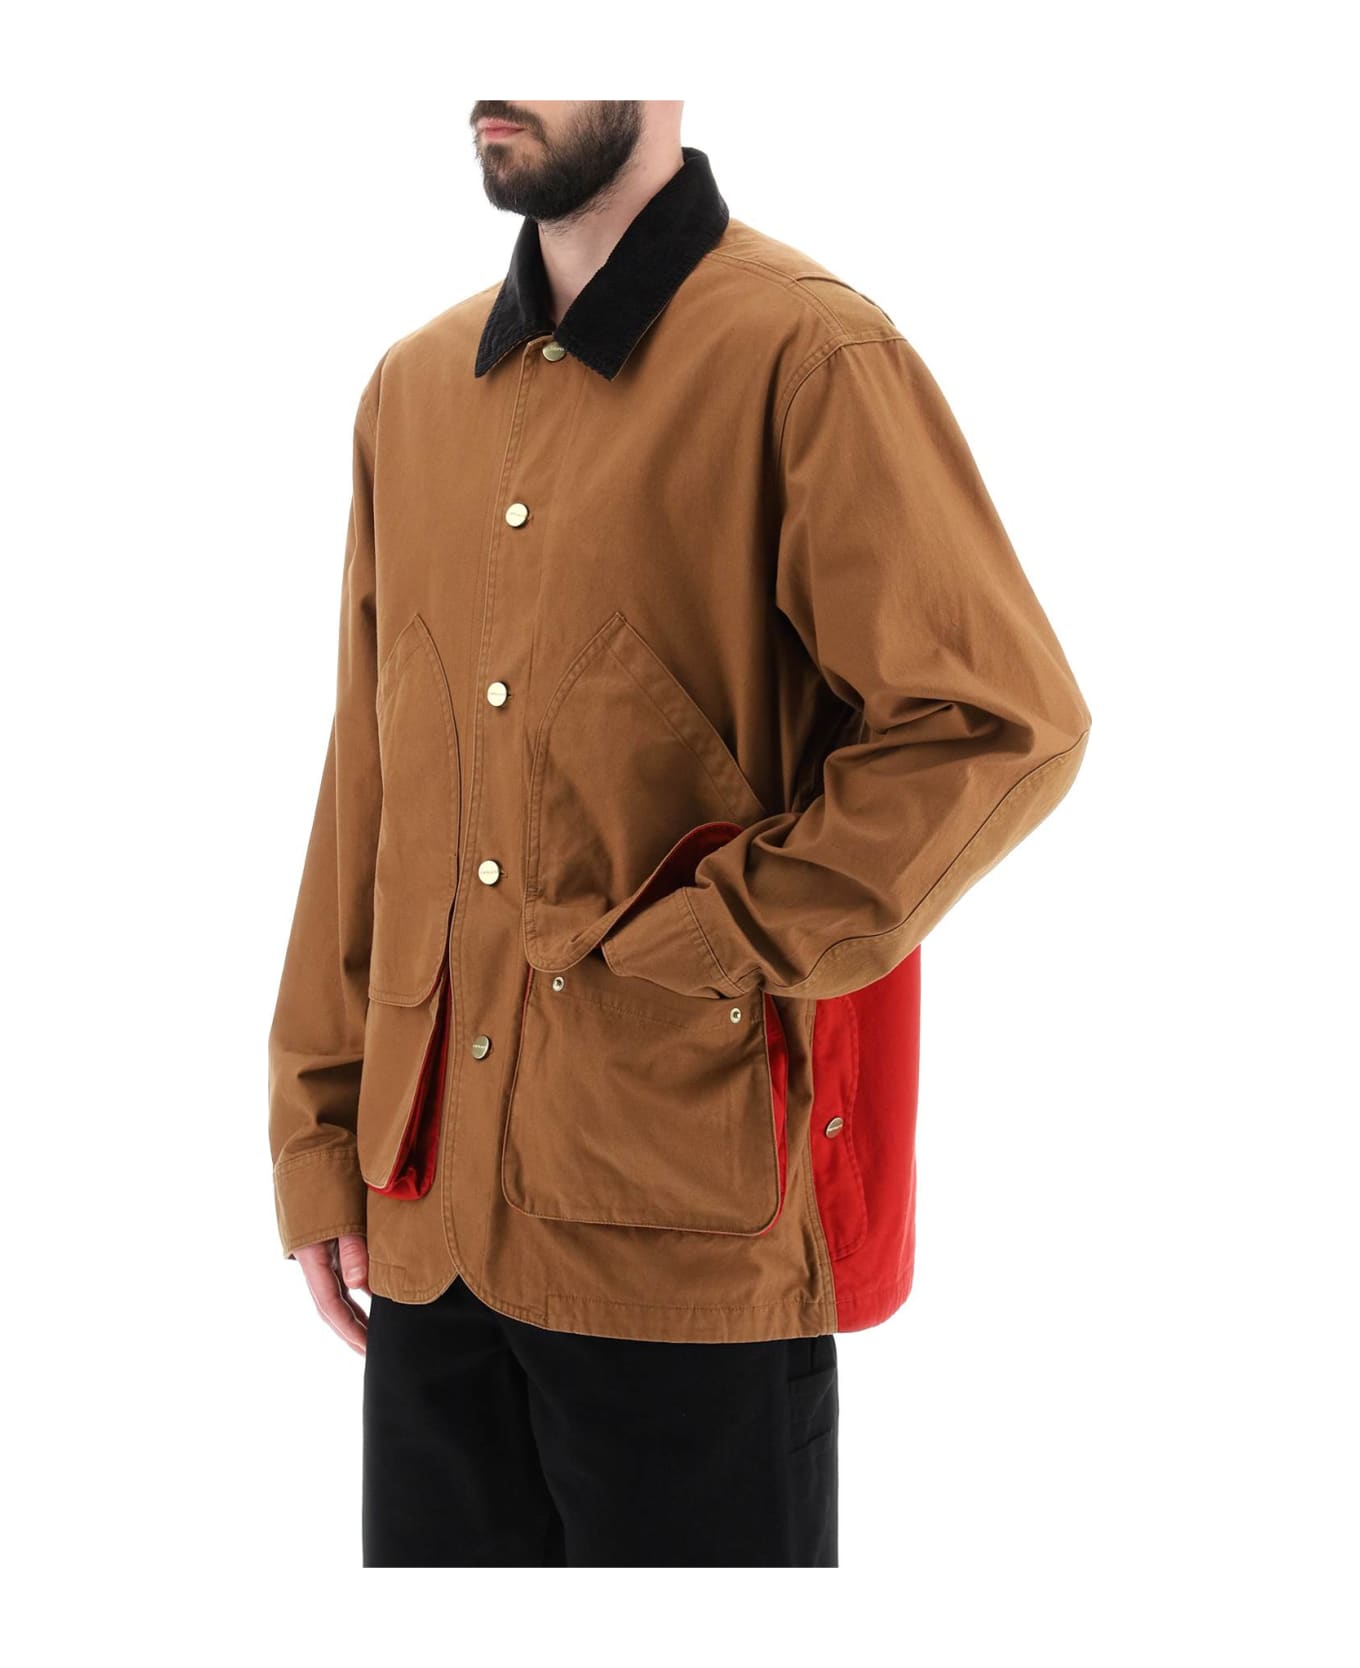 Carhartt 'heston' Cotton Shirt Jacket - HAMILTON BROWN CHERRY (Brown)